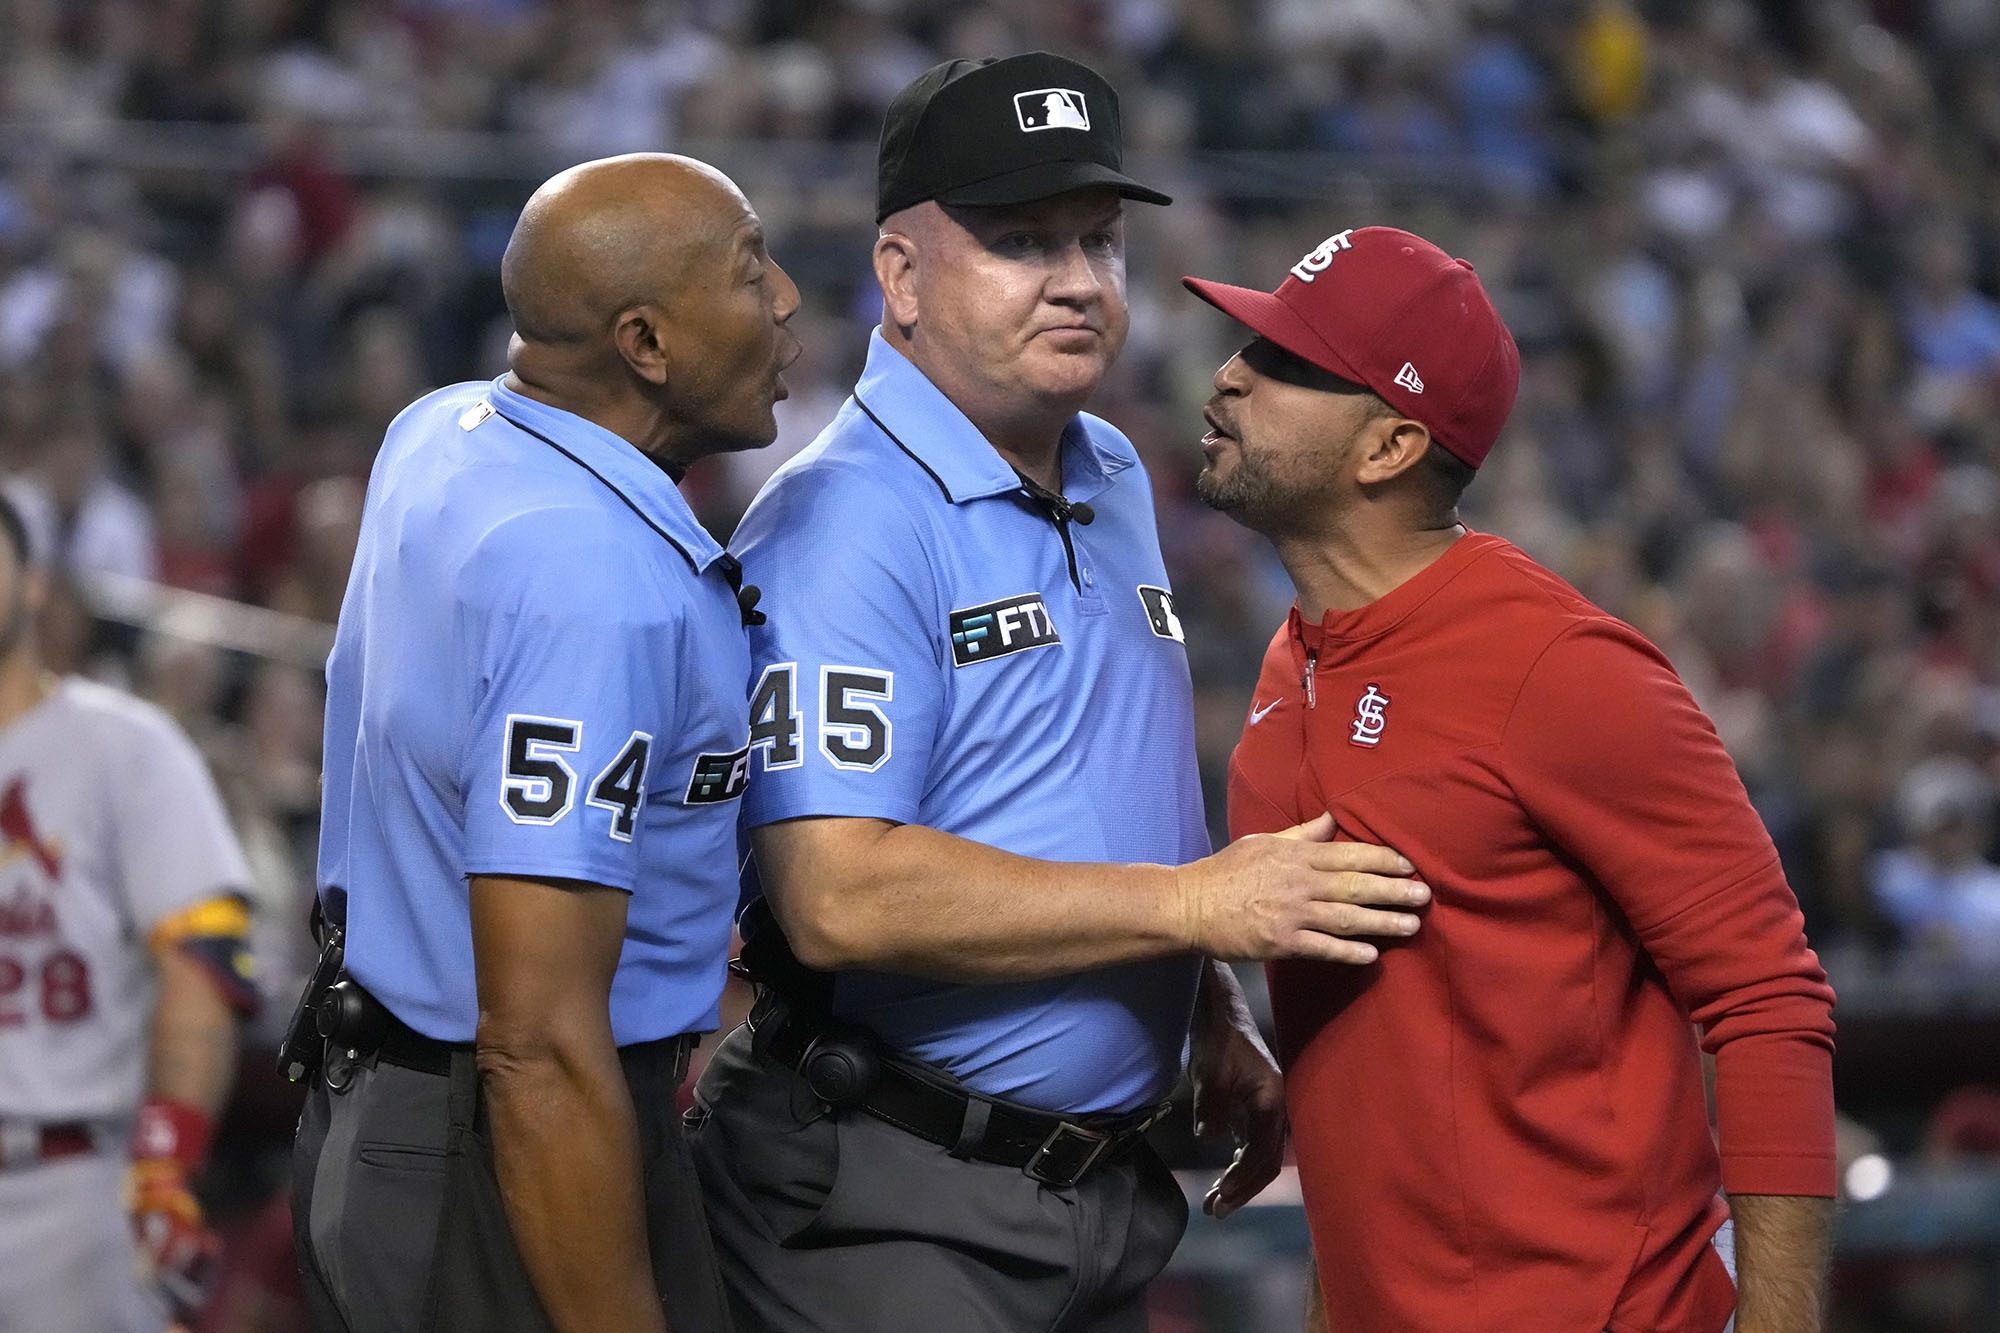 Cardinals' Marmol says umpire C.B. Bucknor 'has zero class' - WTOP